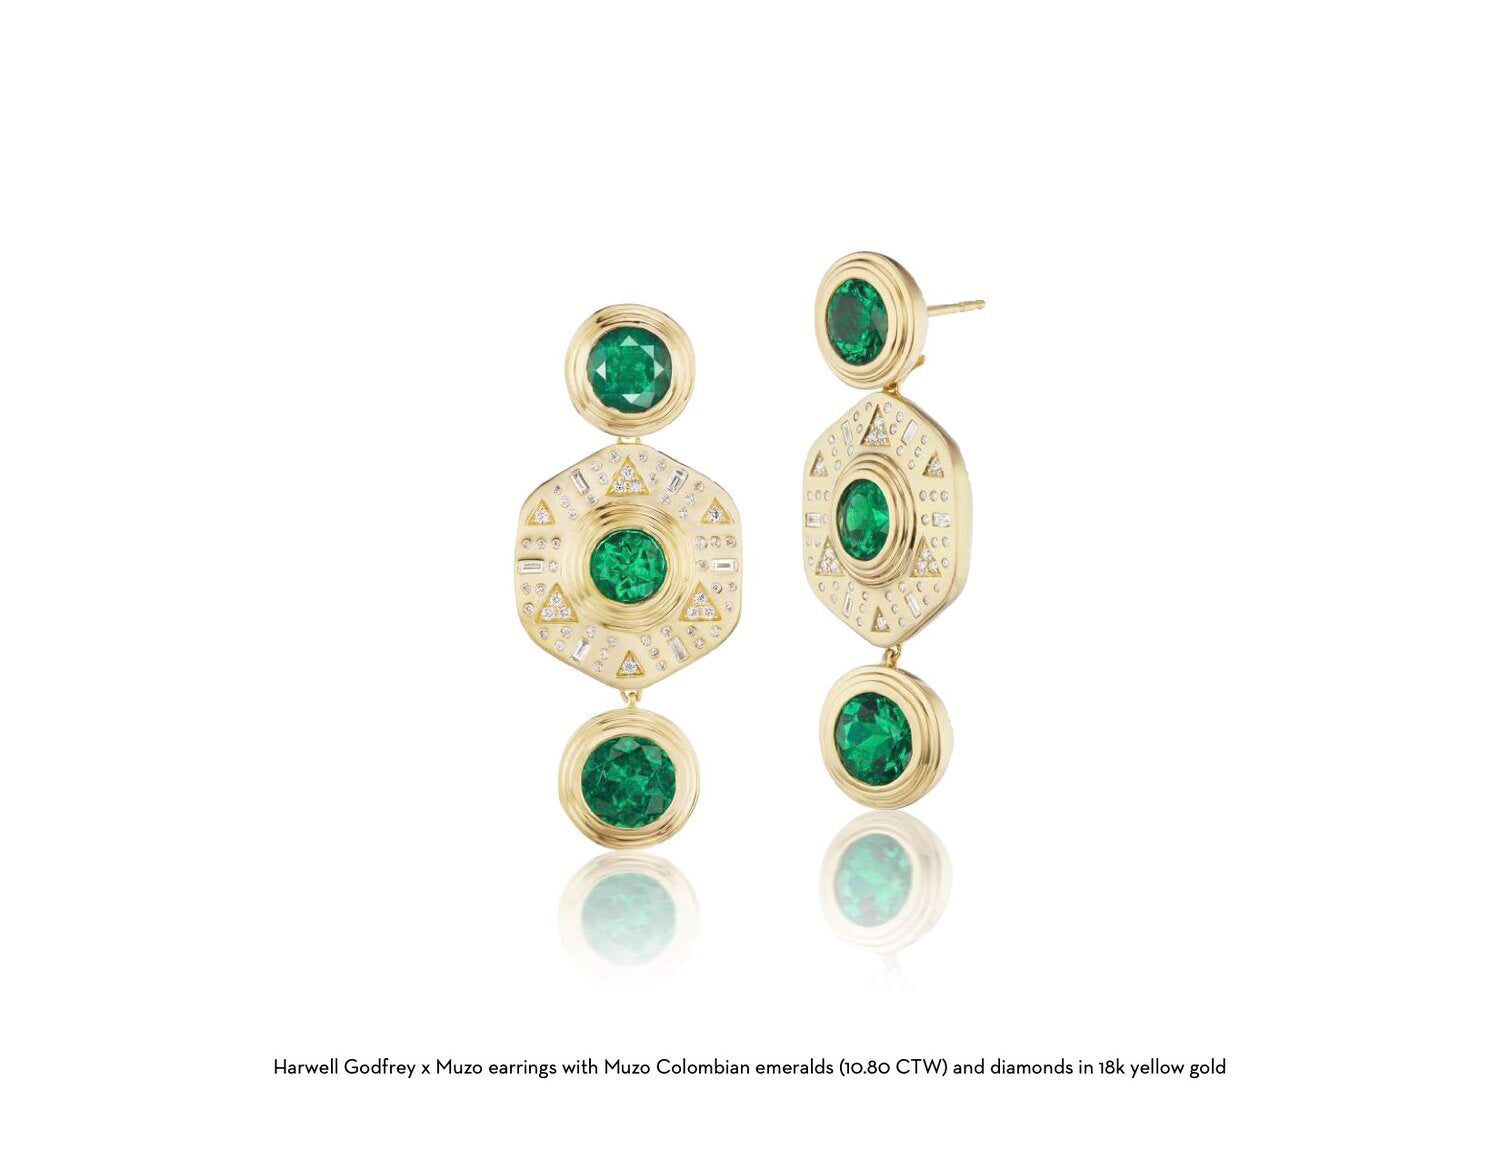 Harwell Godfrey x Muzo earrings with Muzo Columbian emeralds